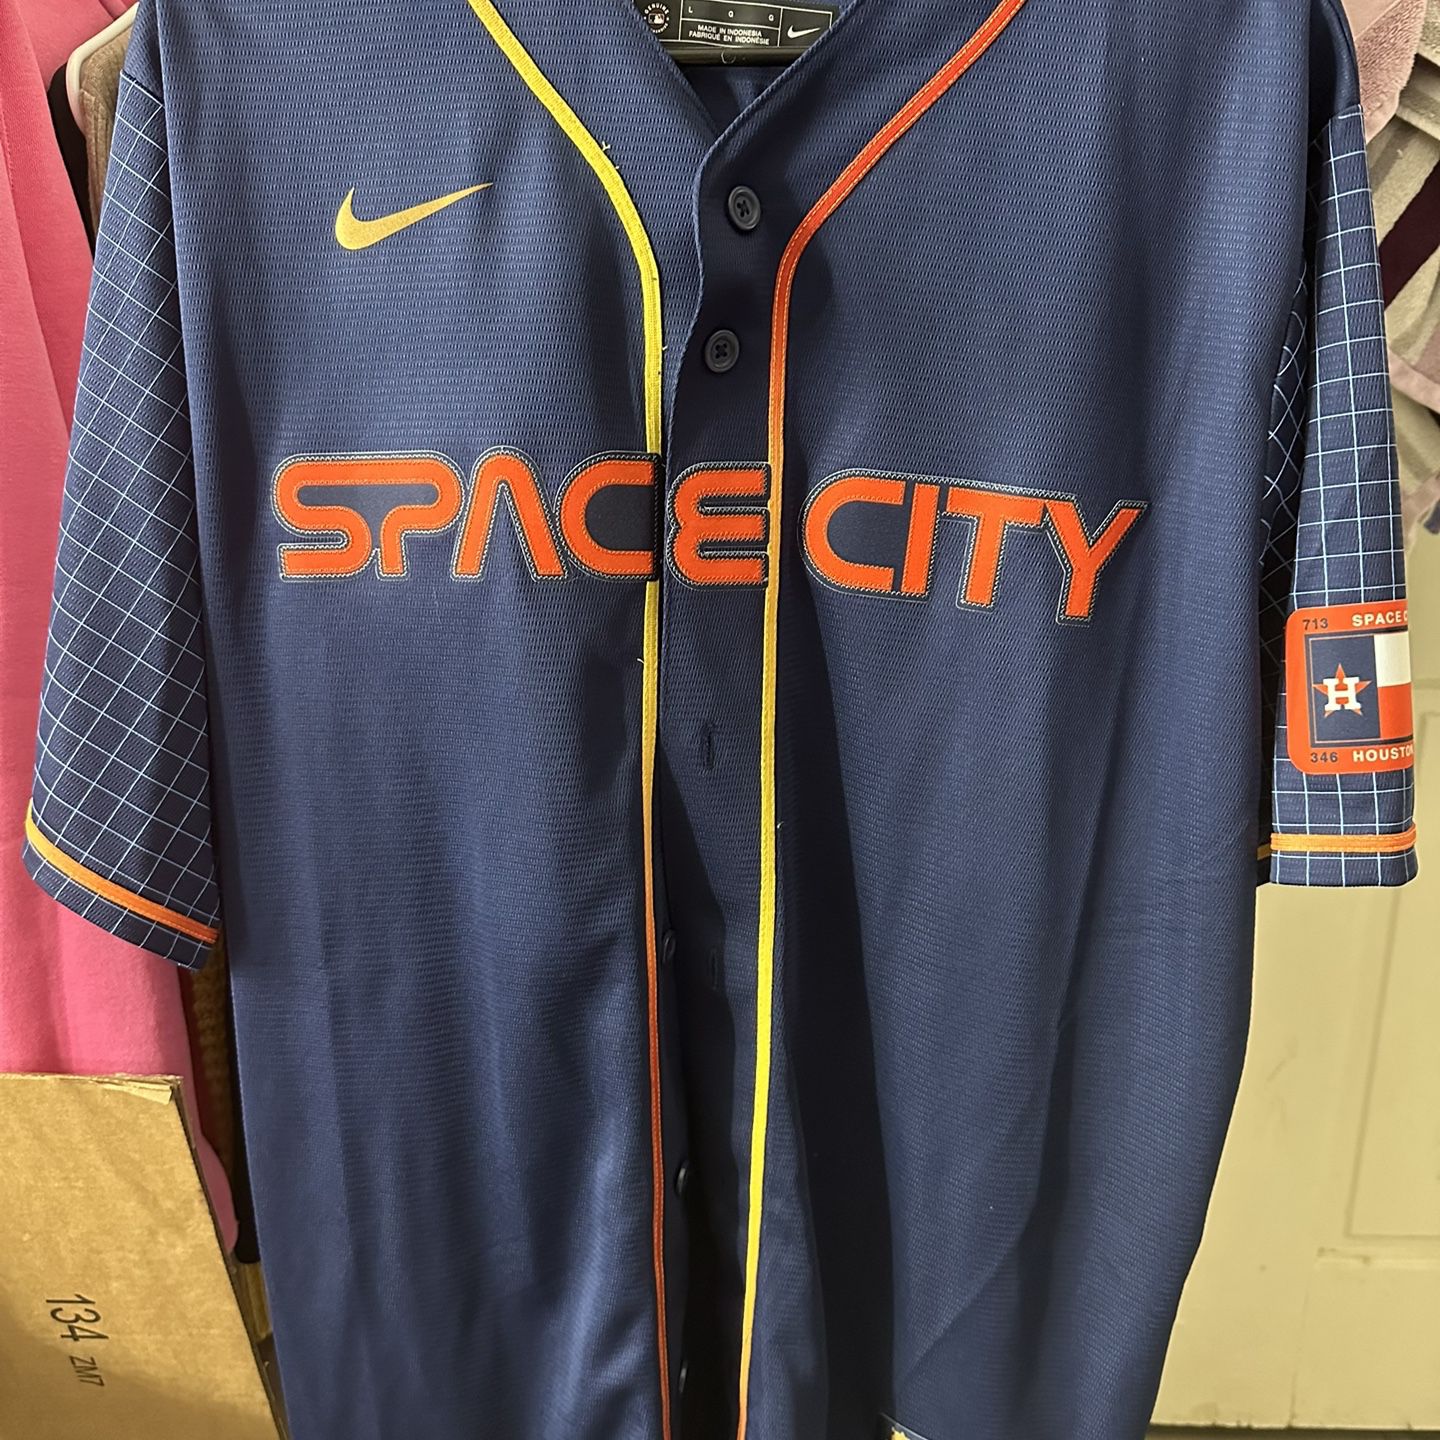 Astros Pinstripe Jersey for Sale in Houston, TX - OfferUp